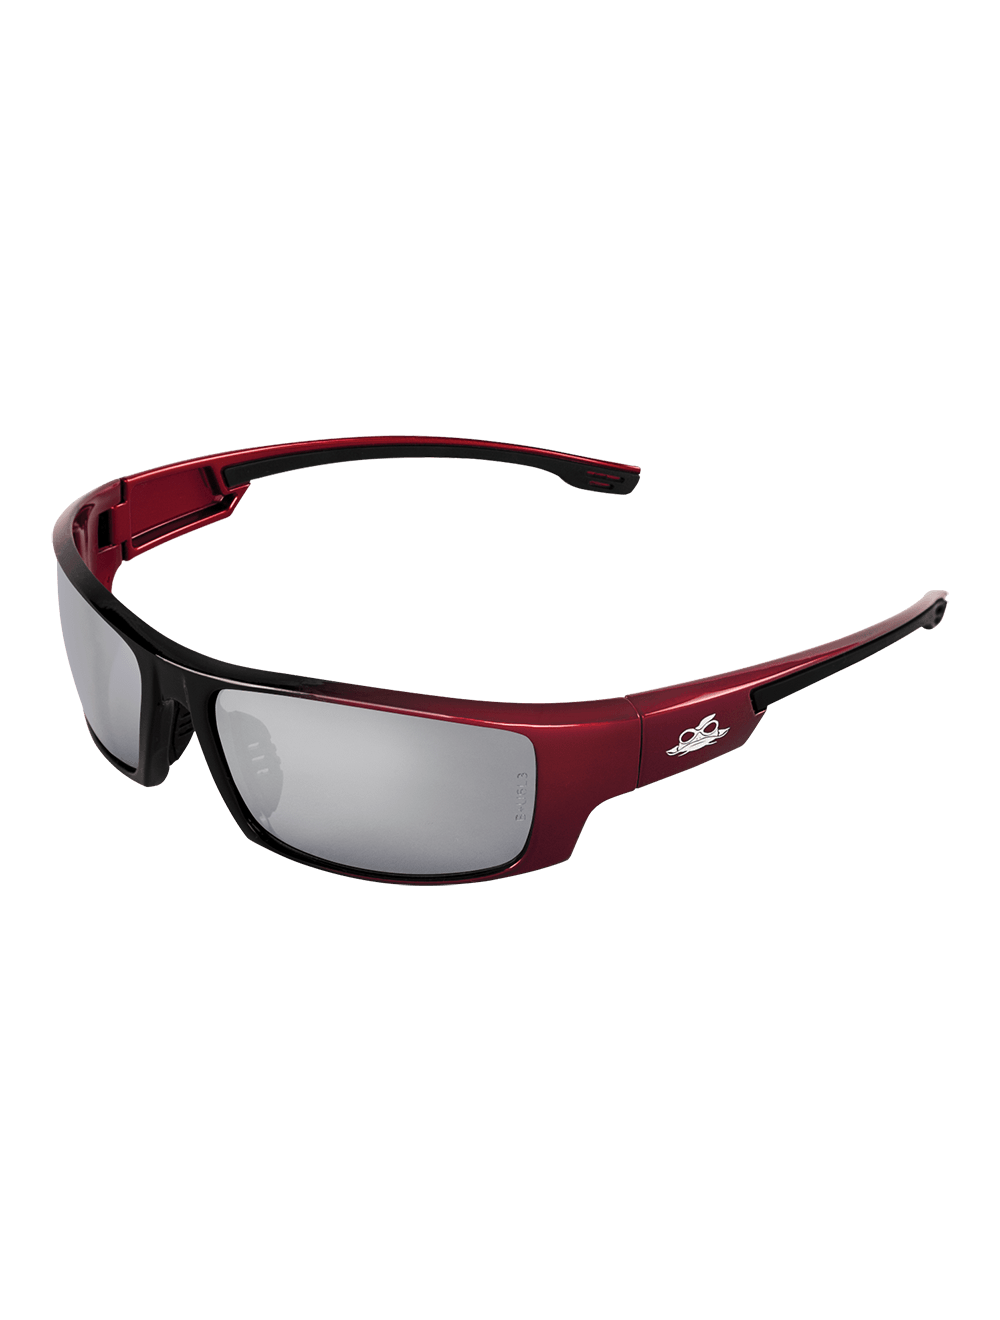 Dorado® Silver Mirror Lens, Red to Black Frame Safety Glasses - BH9117